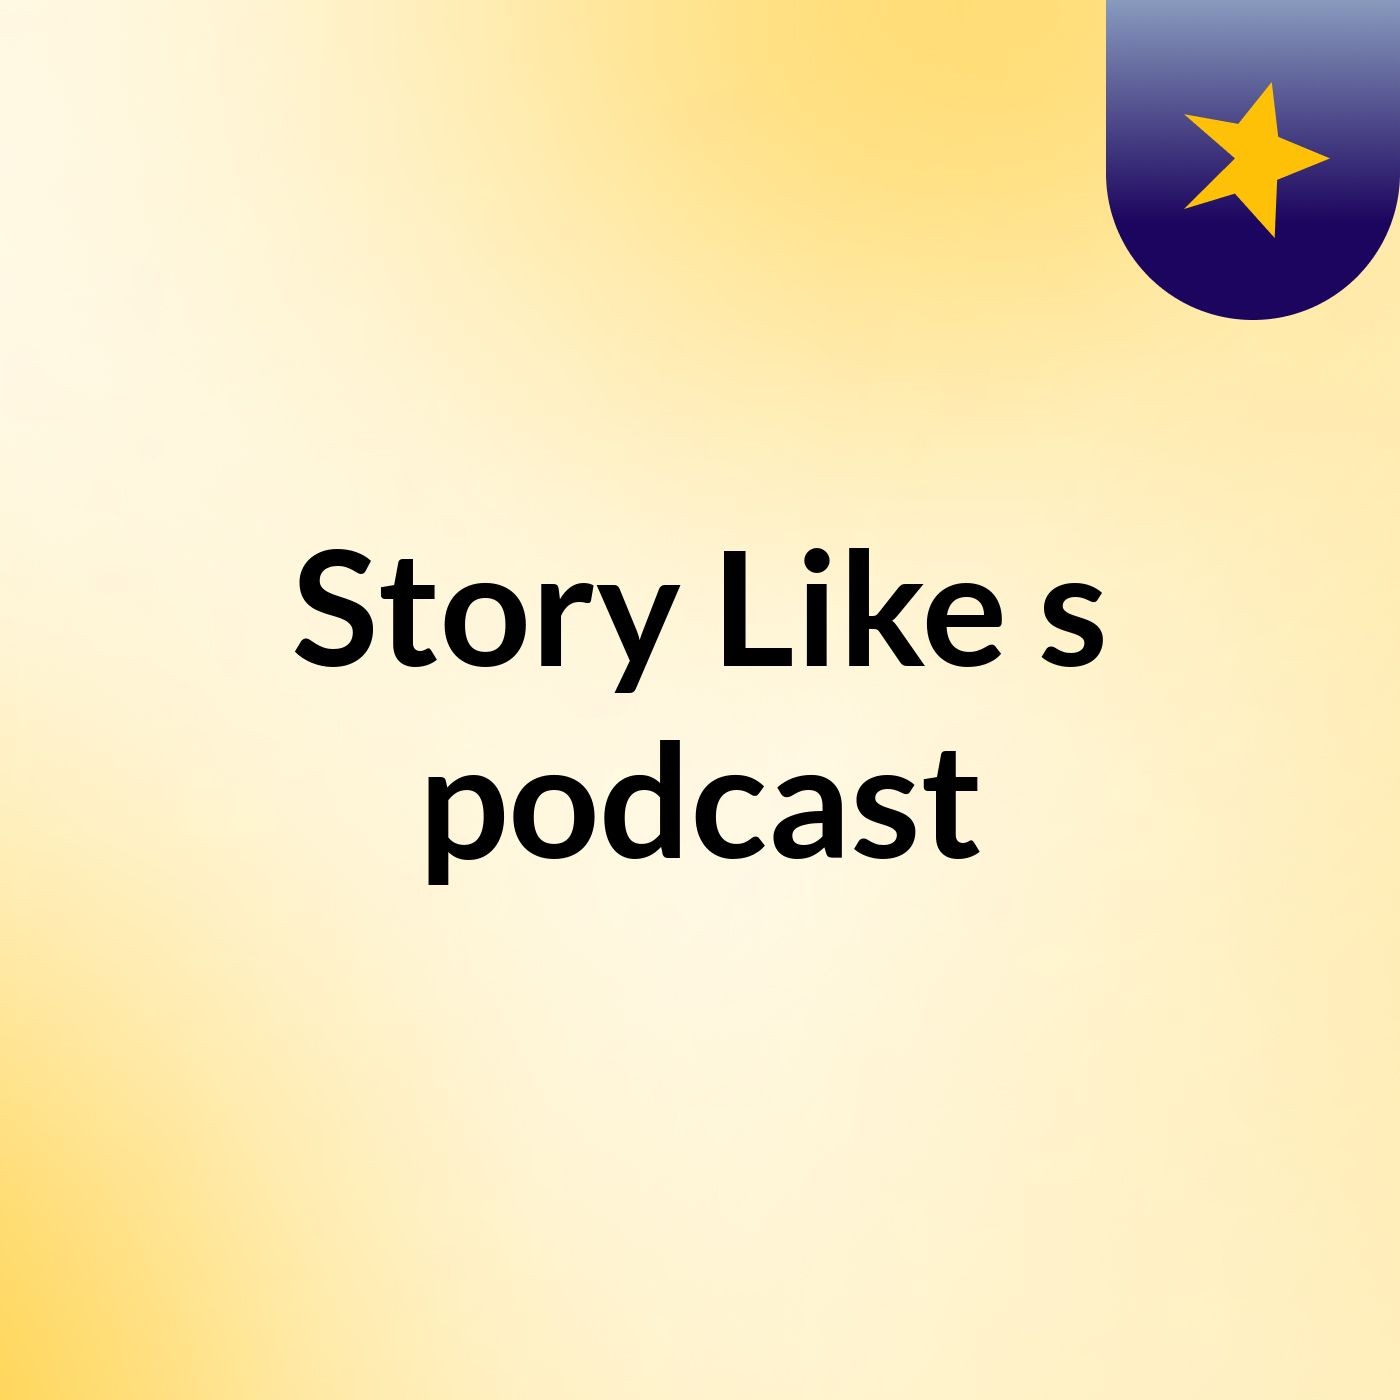 Episode 5 - Story Like's podcast